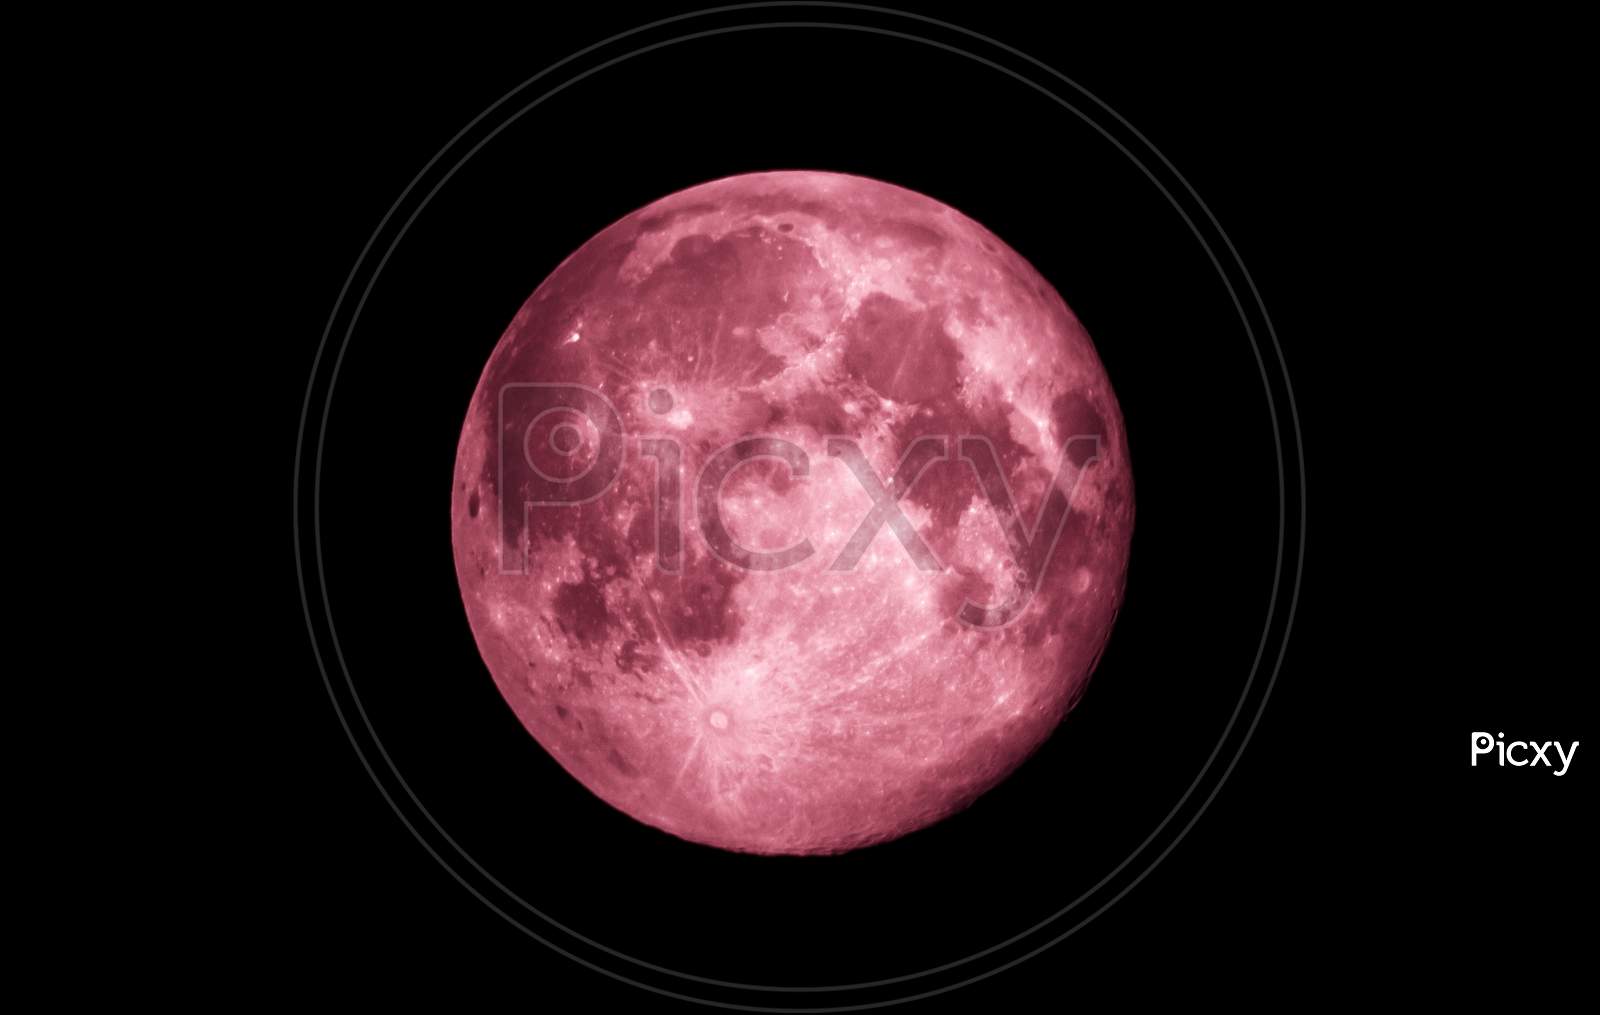 Super pink moon, in the sky night scene.